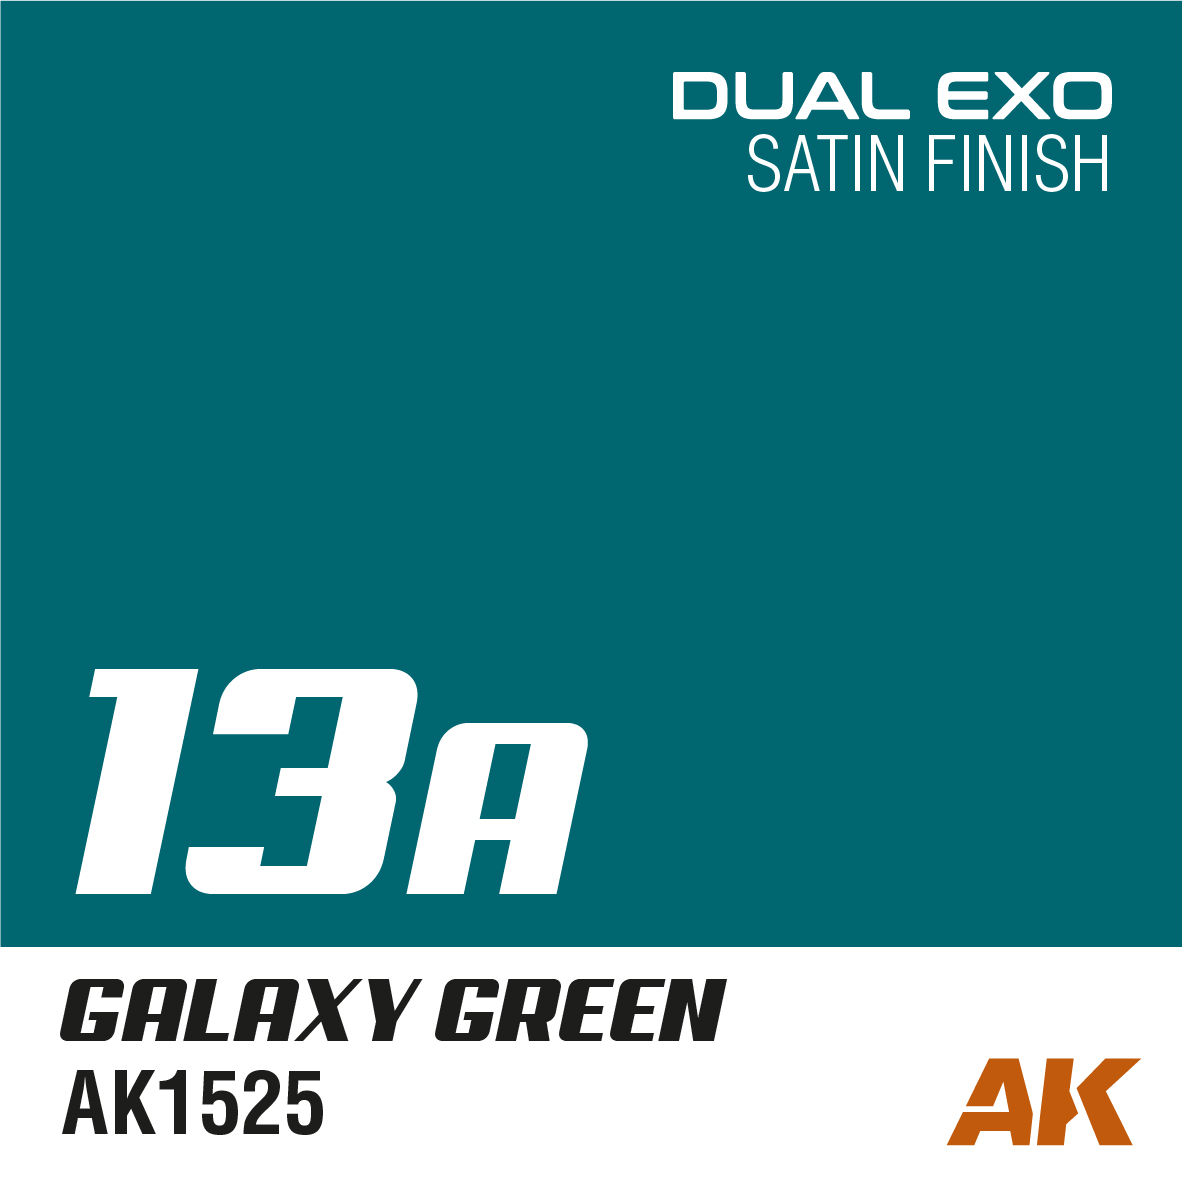 Dual Exo 13A - Galaxy Green